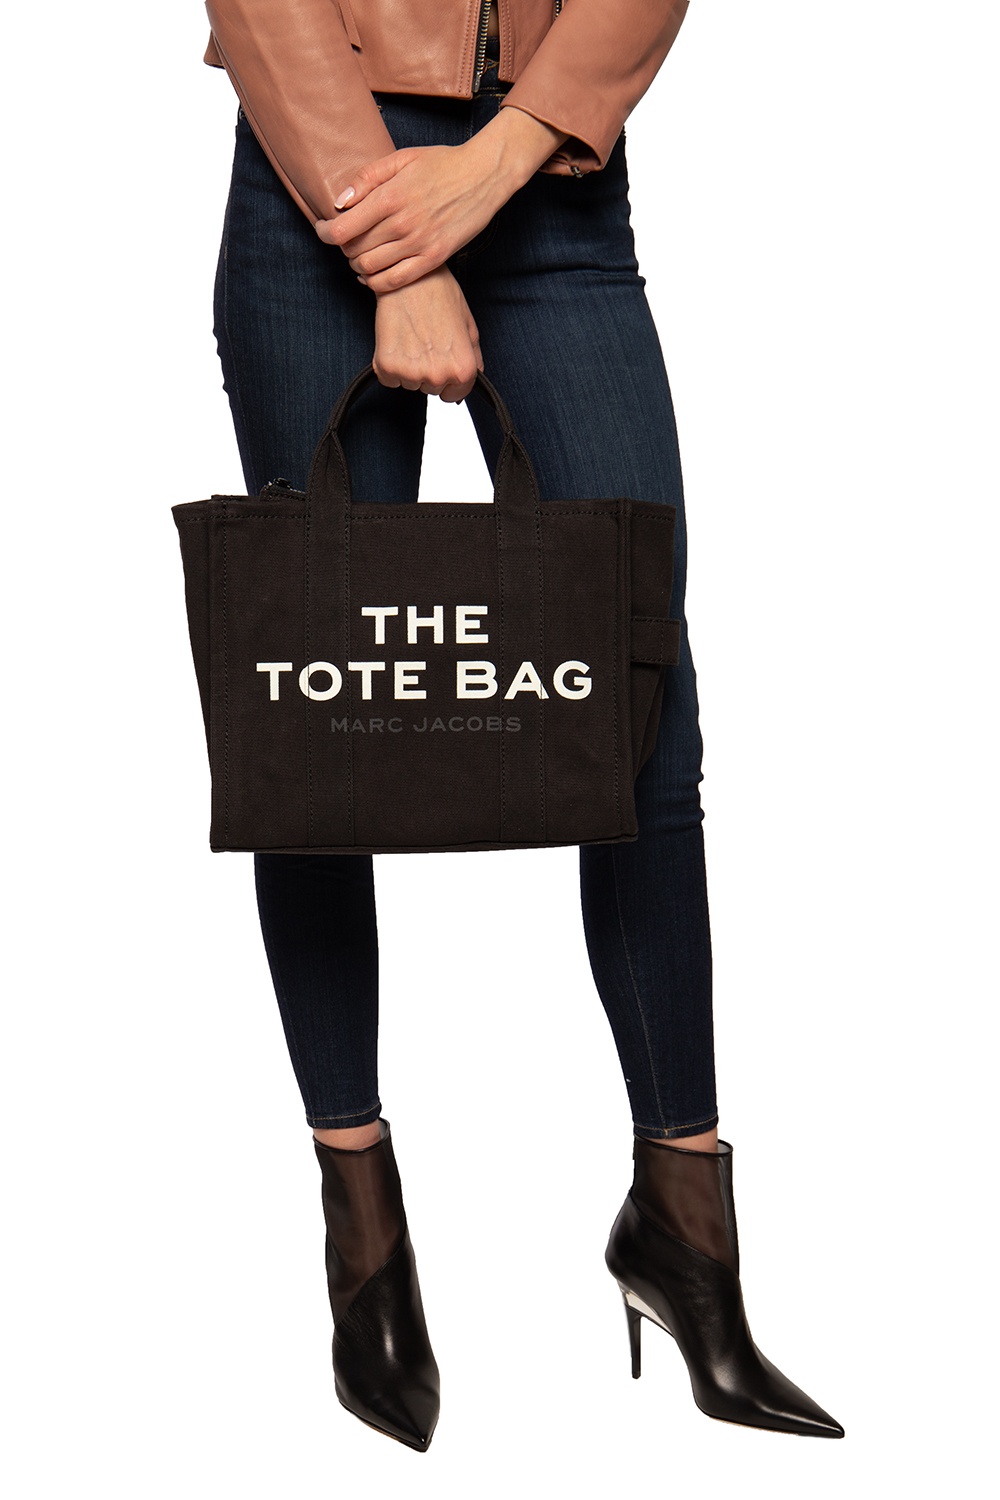 The Traveler Tote' bag Marc Jacobs (The) - Vitkac US